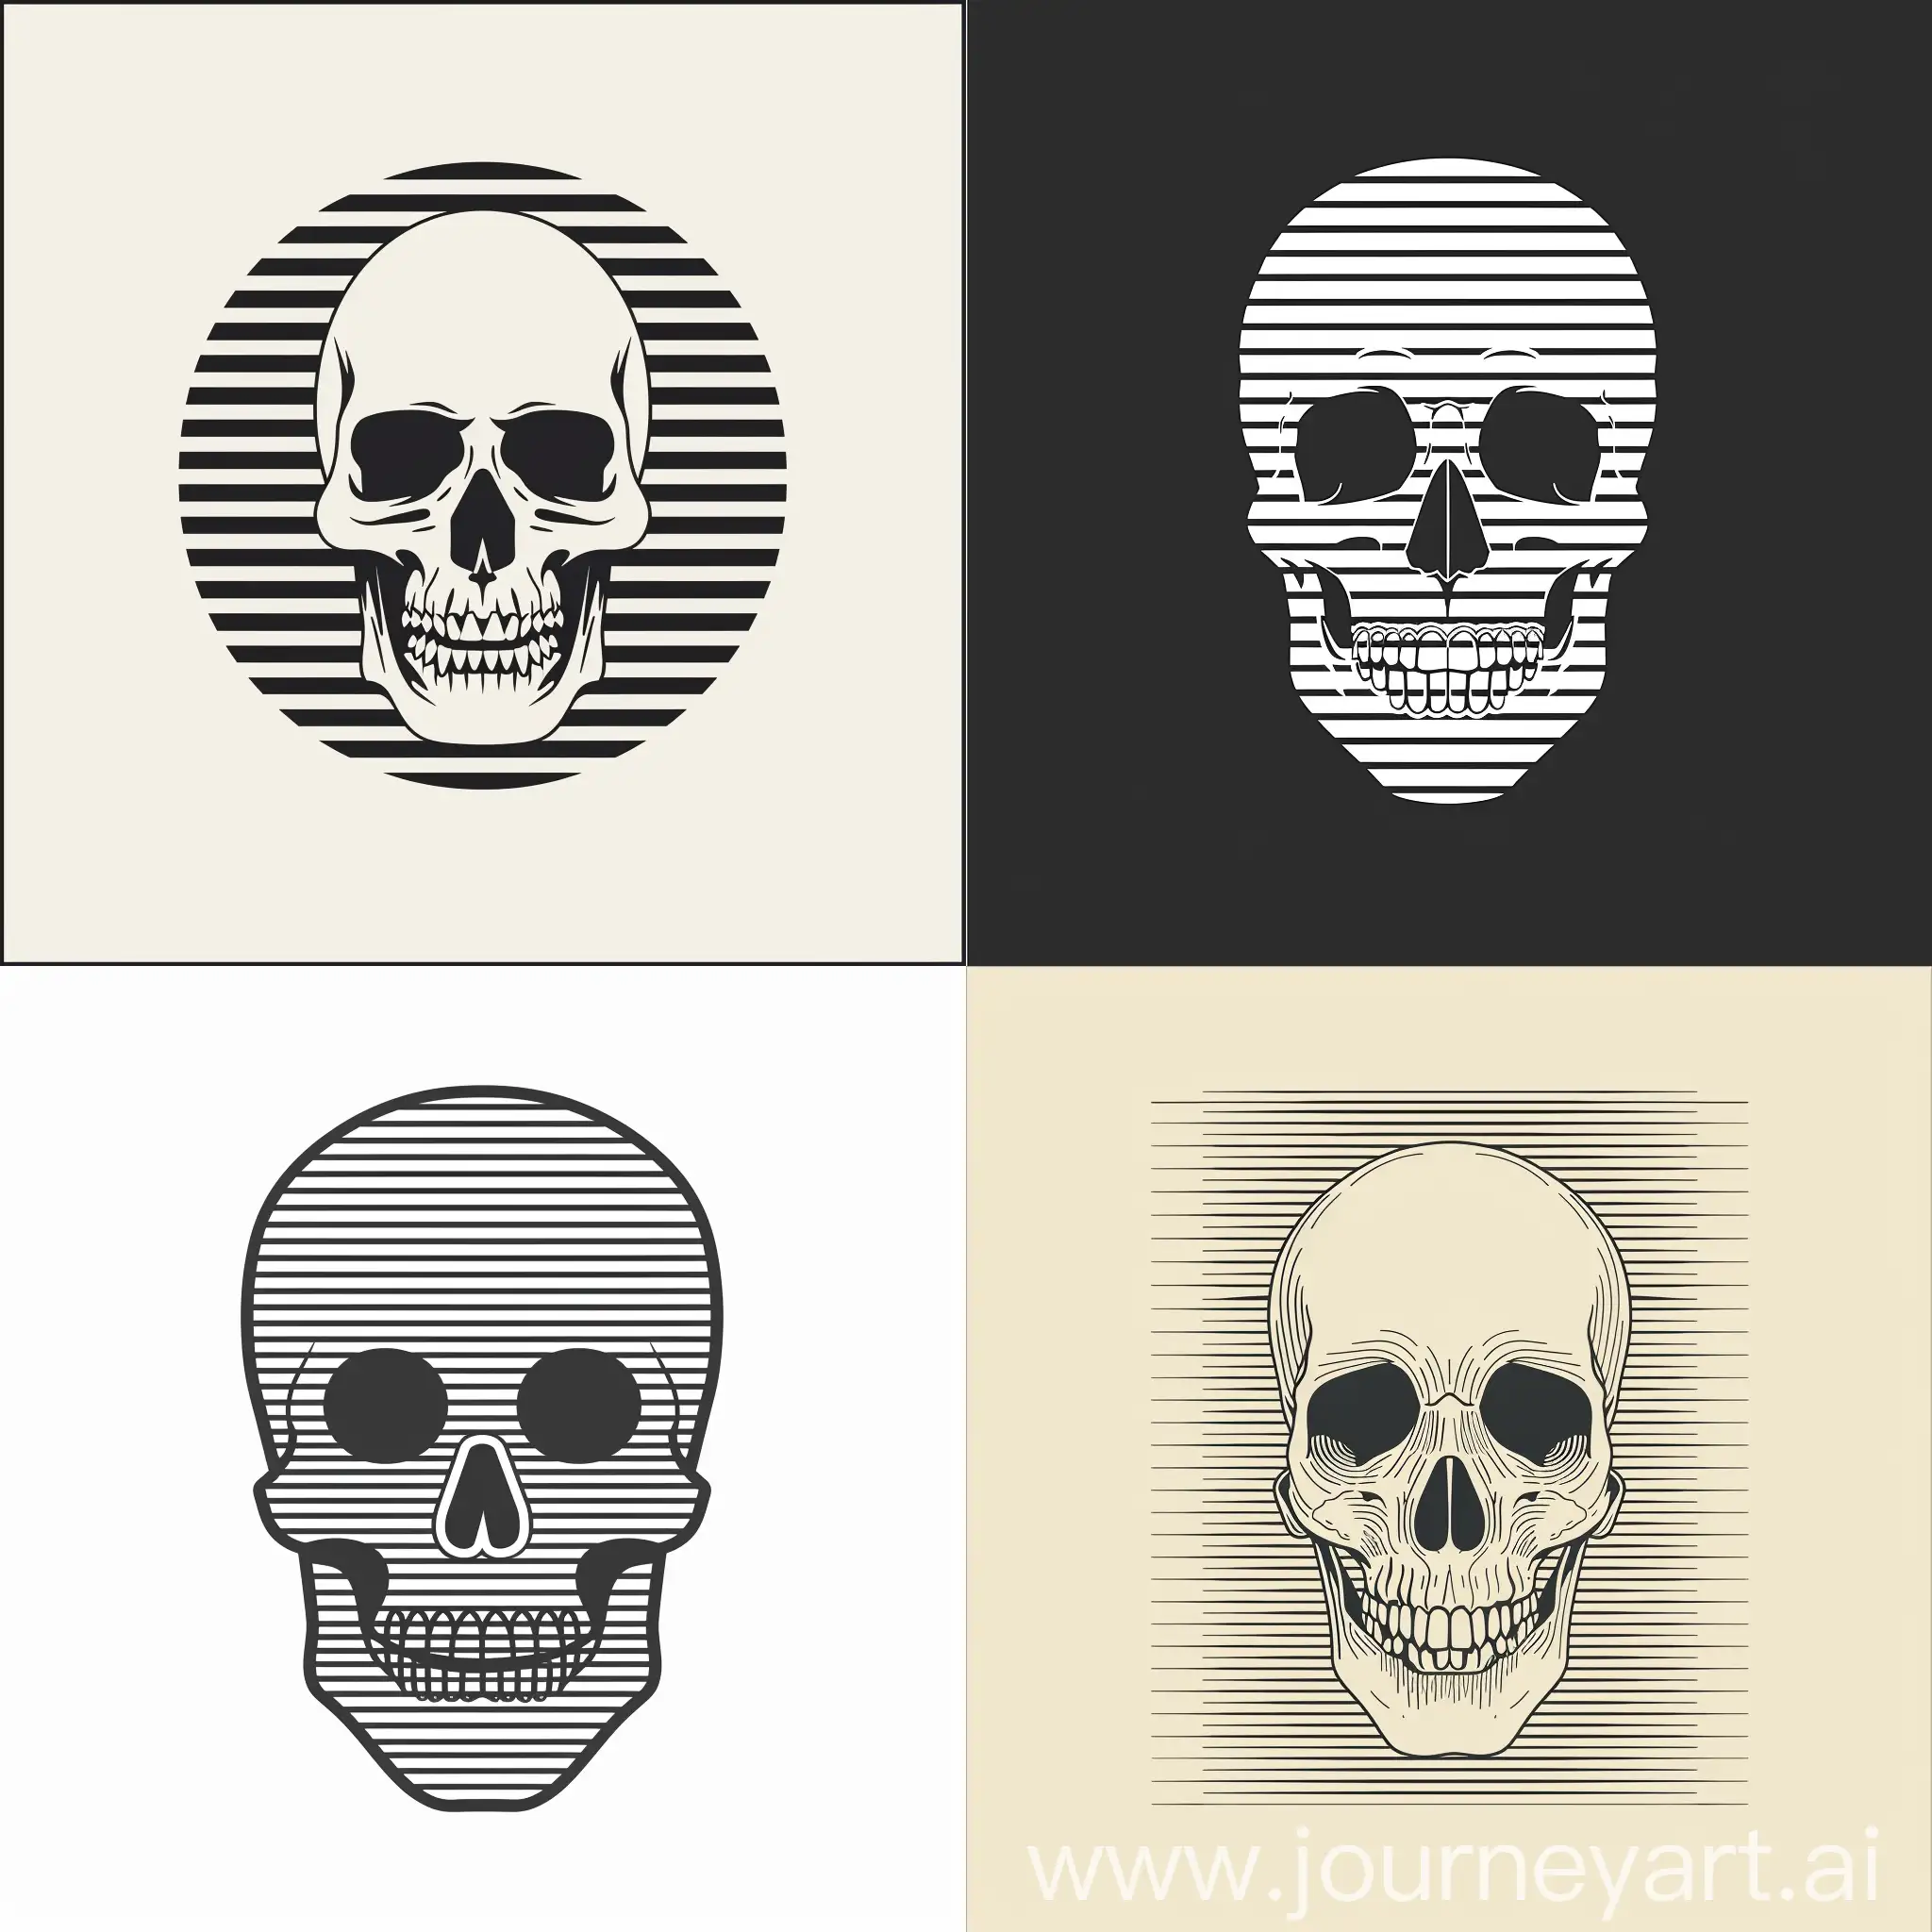 Minimalist skull icon with horizontal lines